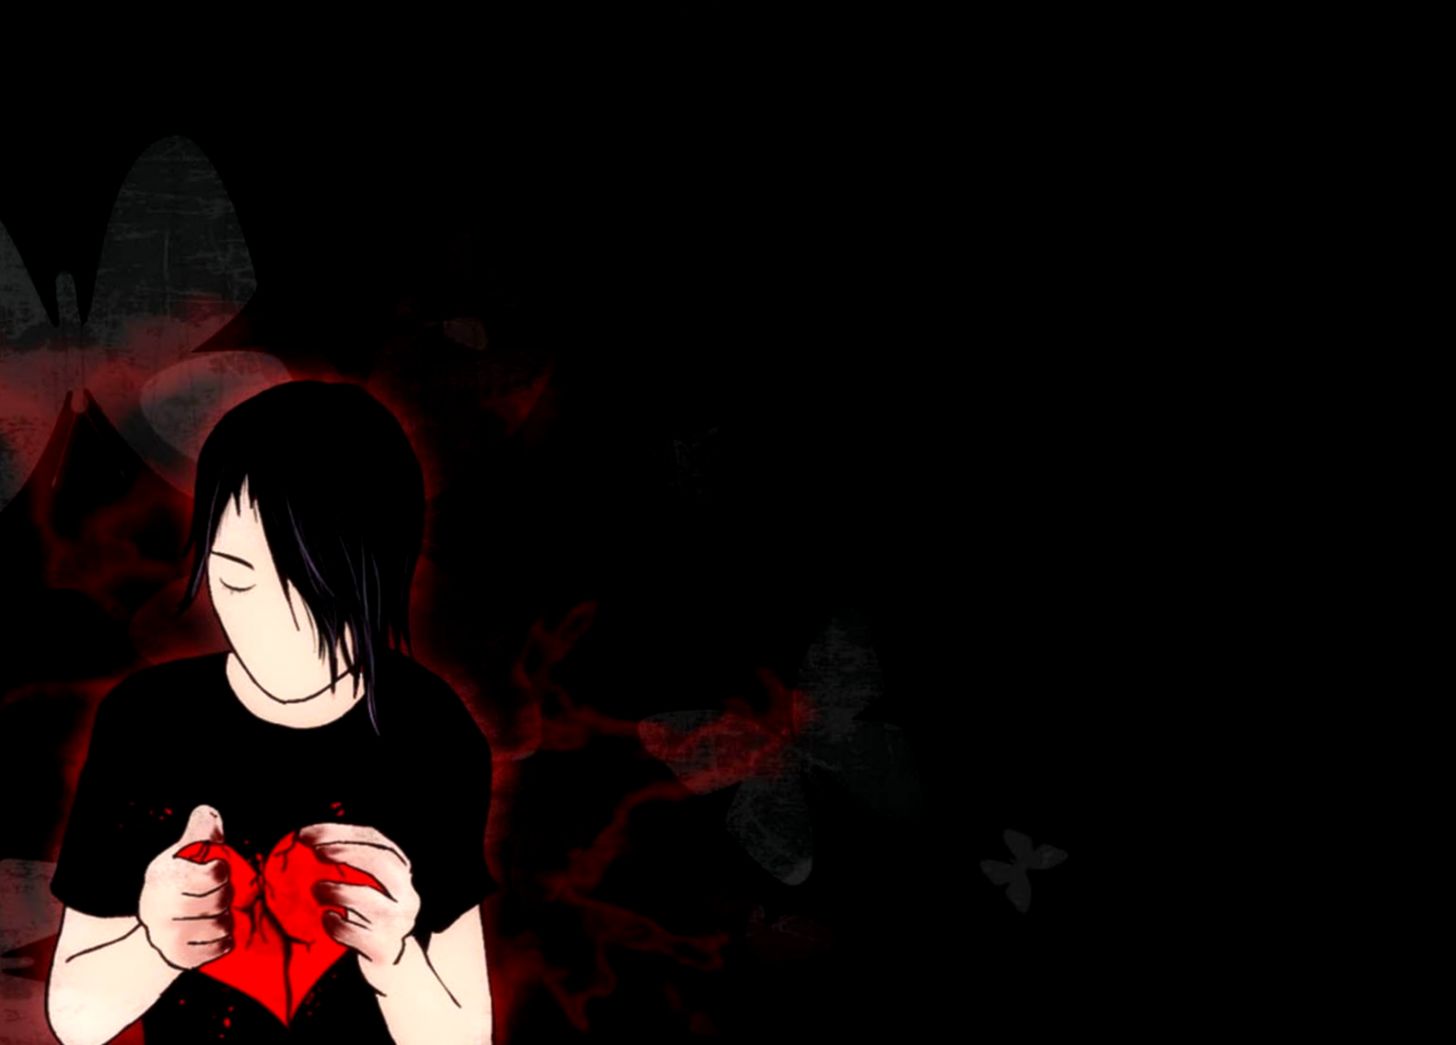 1456X1045 Sad Heart Broken Anime Boy Wallpapers - Wallpaper Cave. 